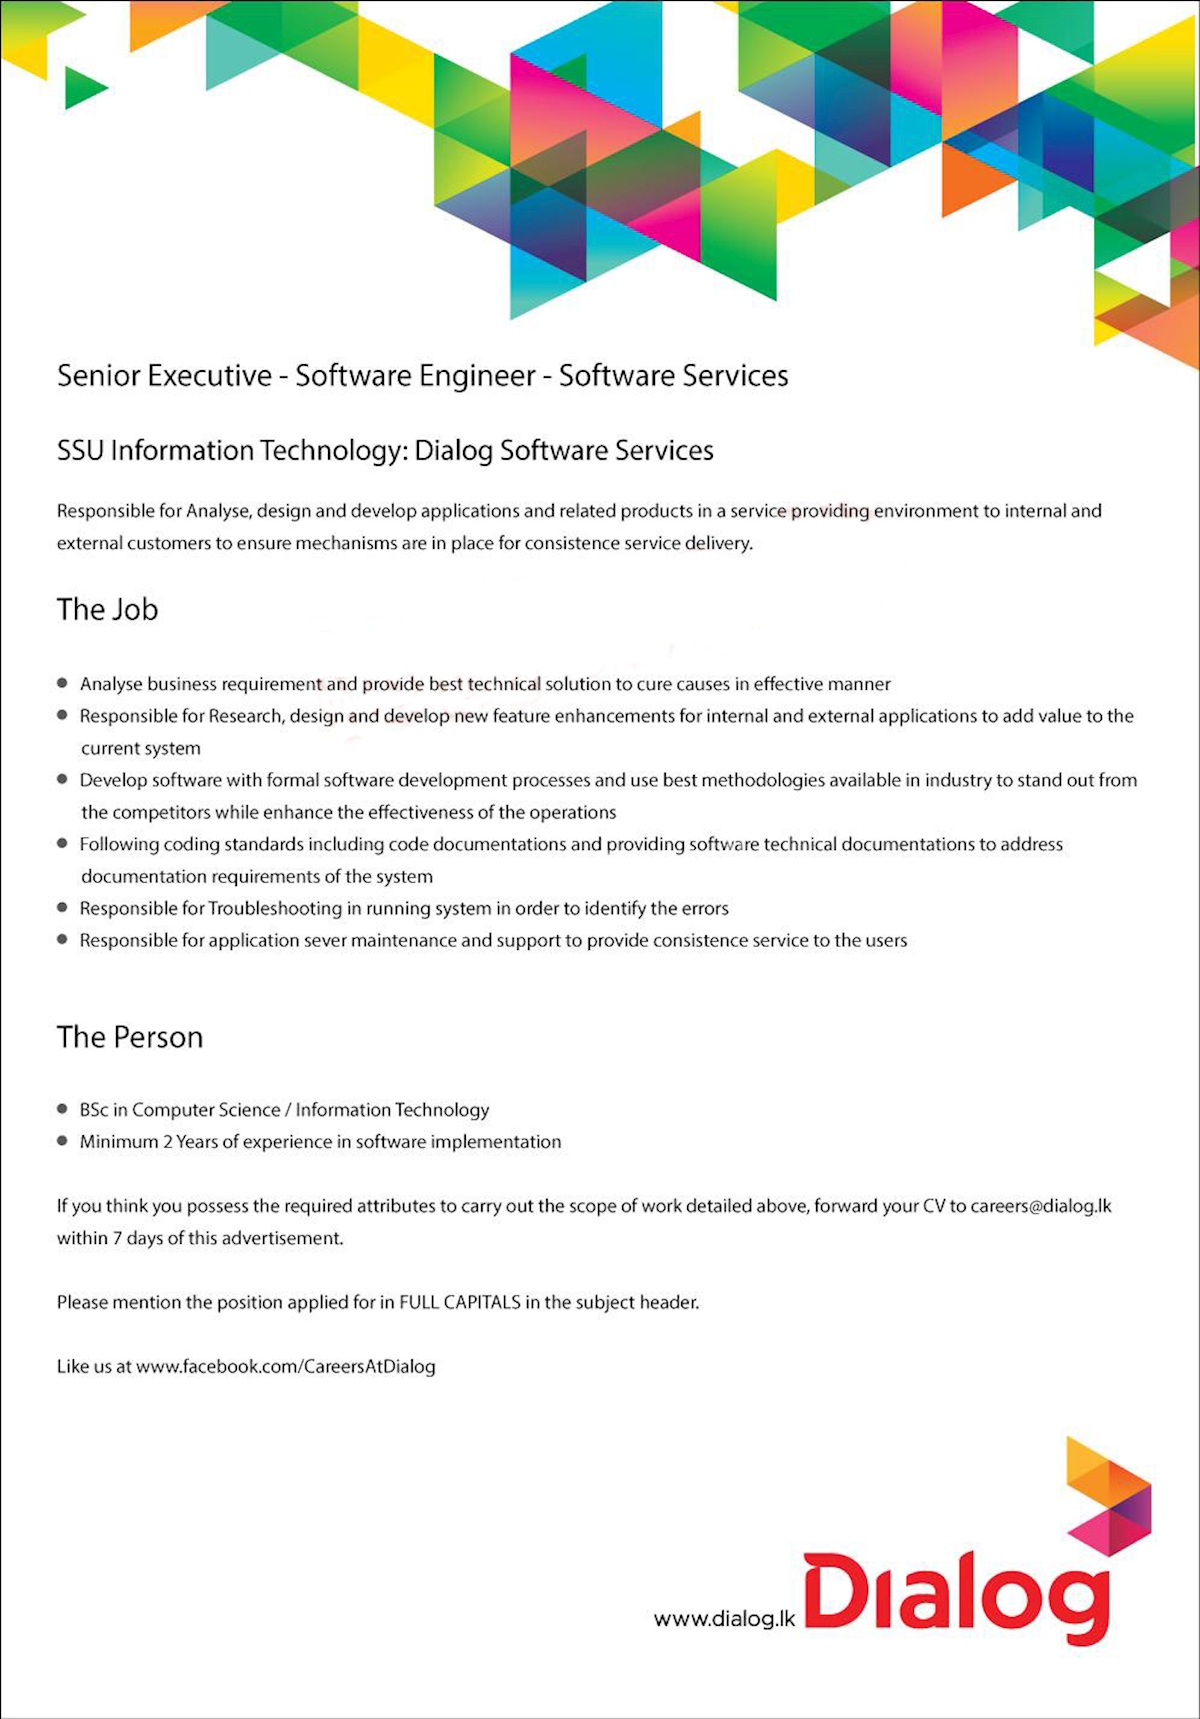 Senior Executive - Software Engineer - Software Services